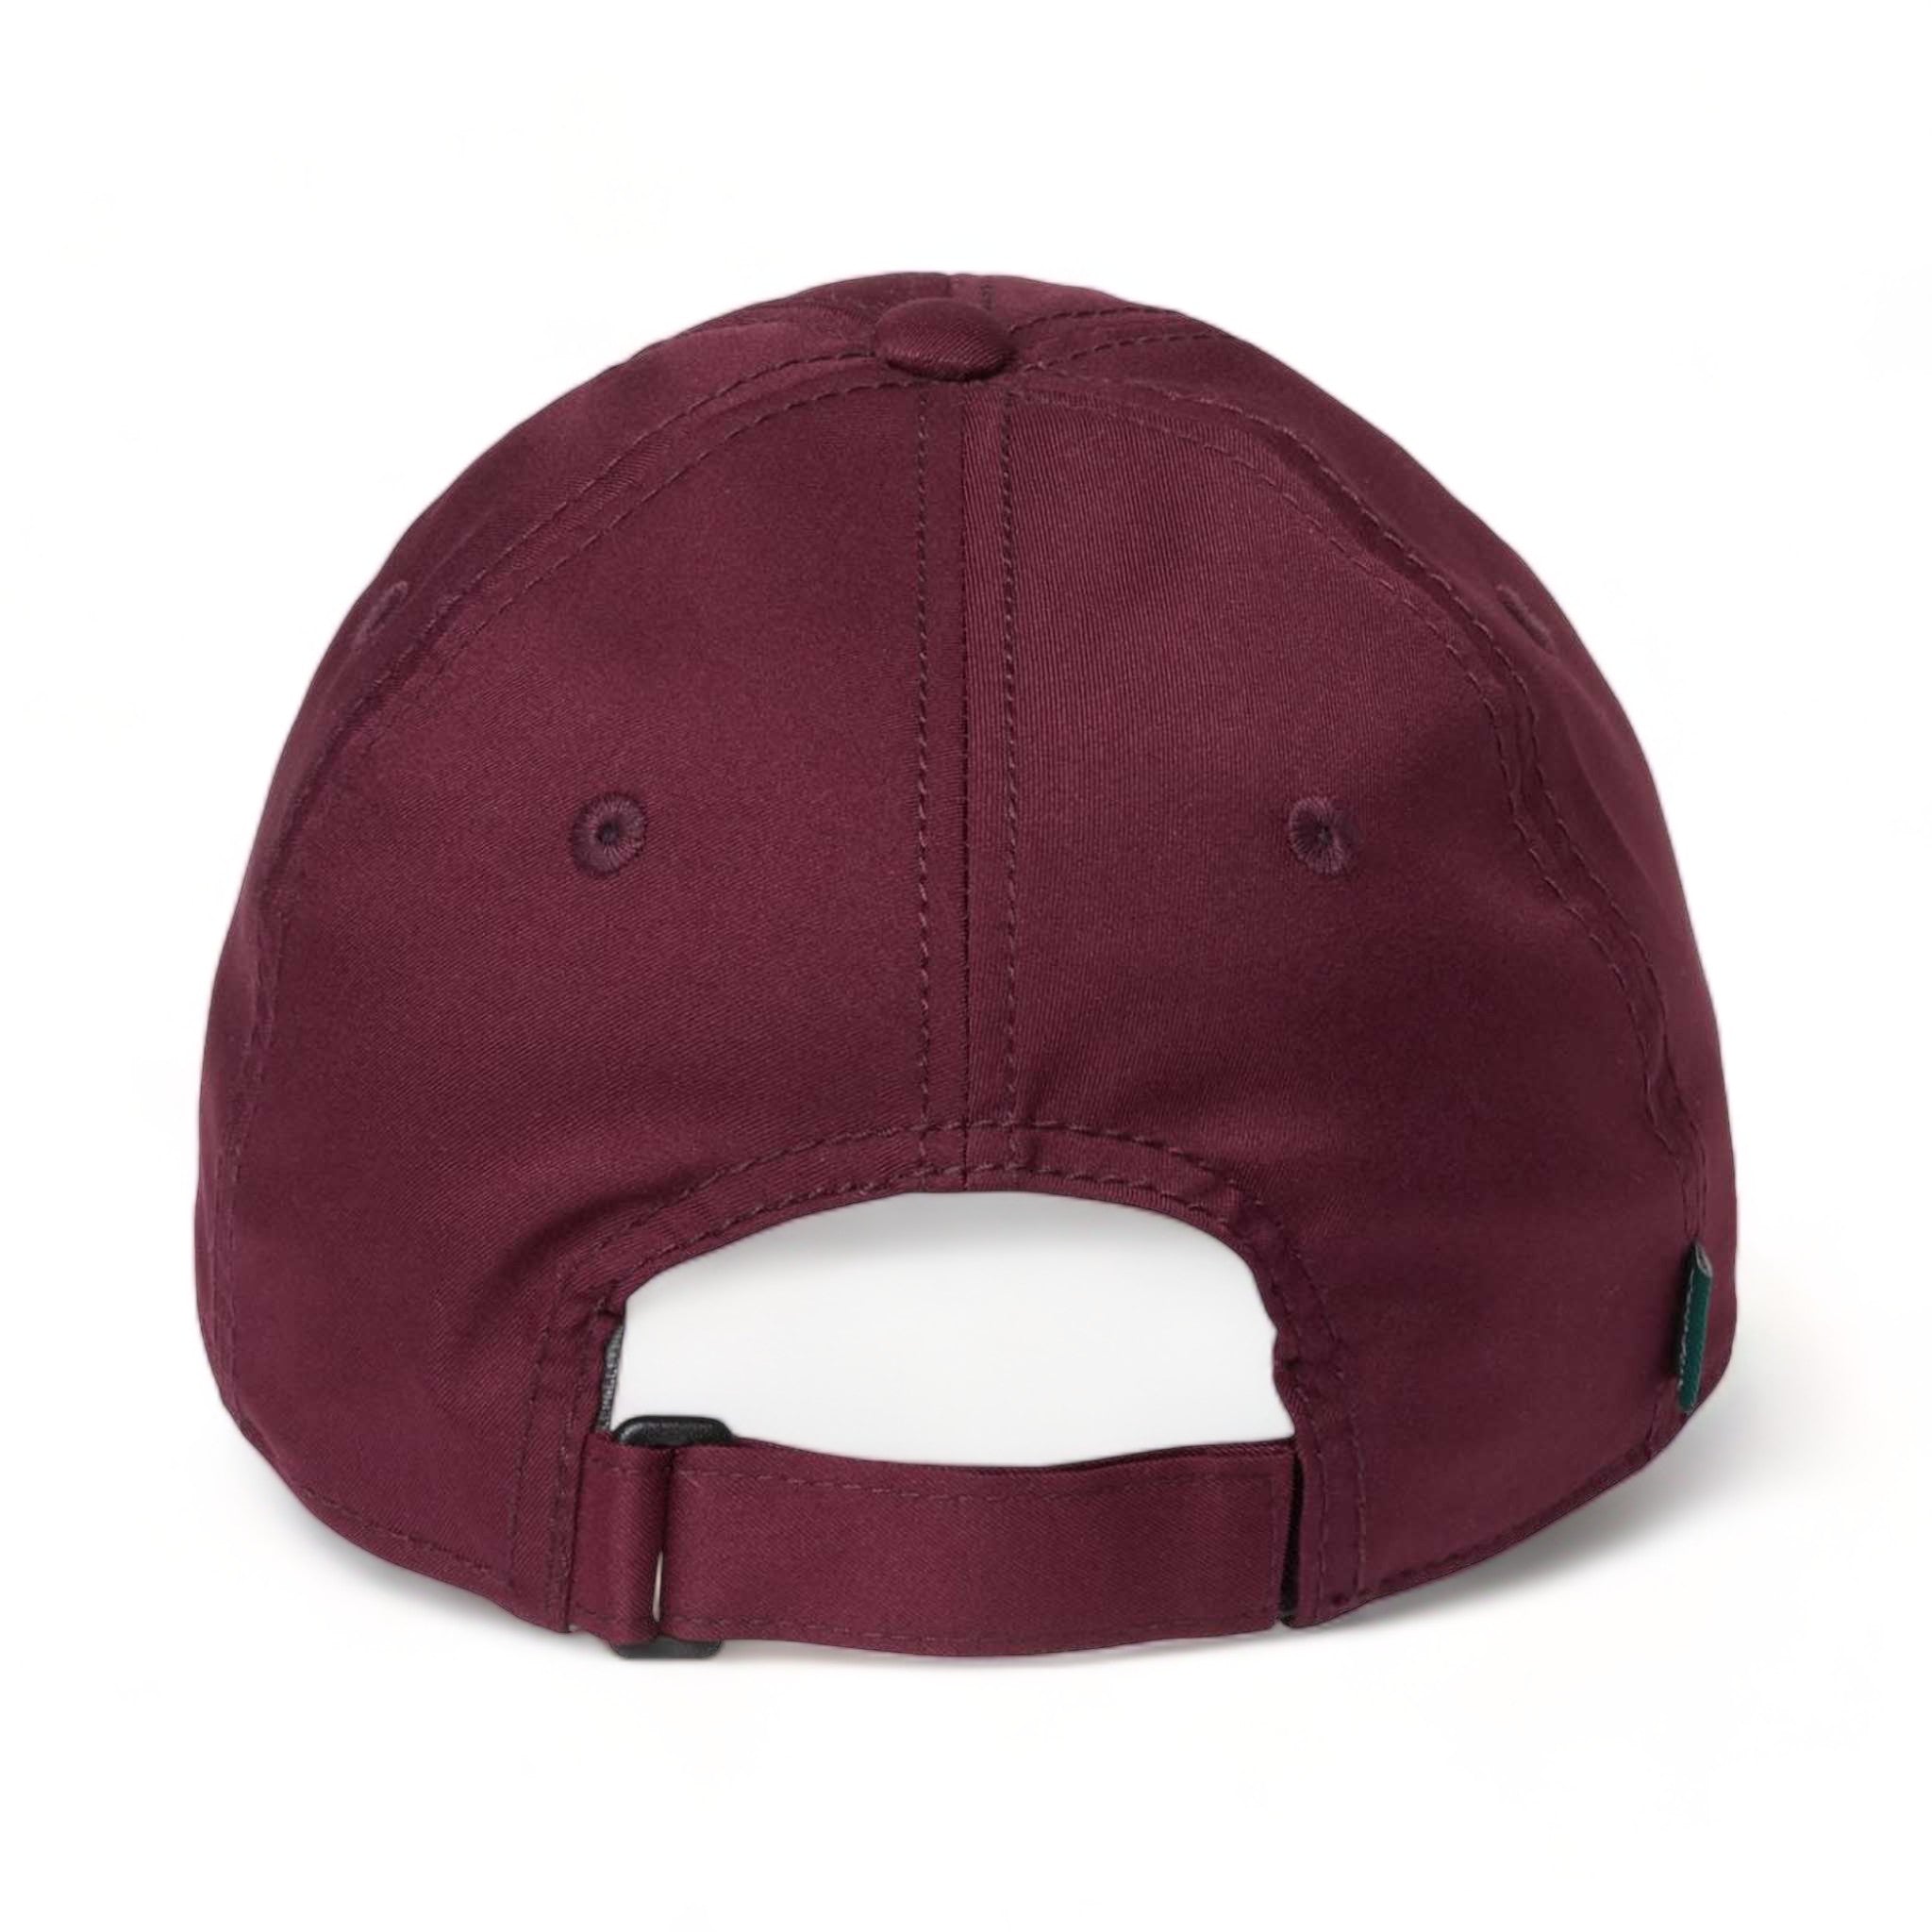 Back view of LEGACY CFA custom hat in burgundy